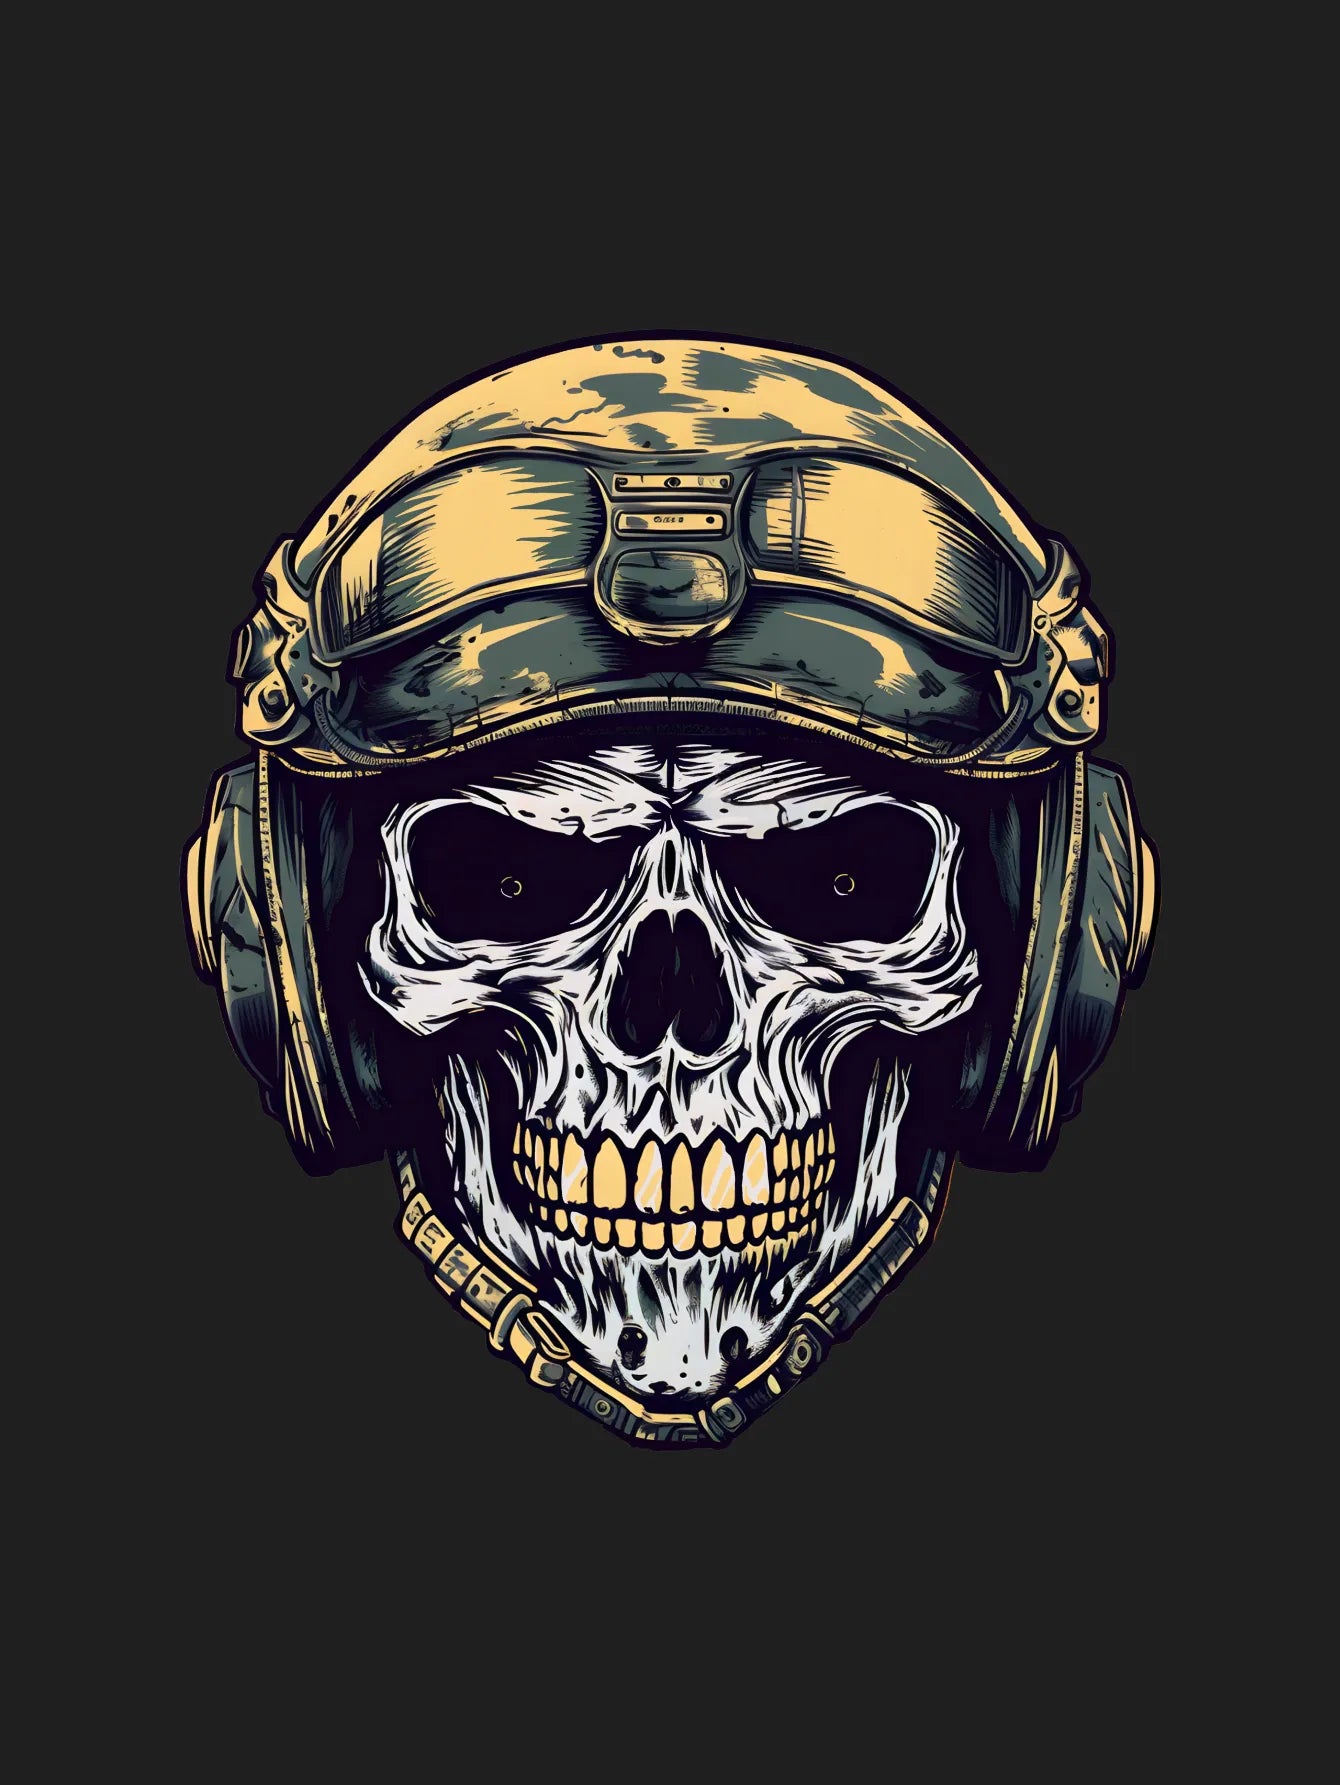 A Scary Skull Inside a Military Helmet